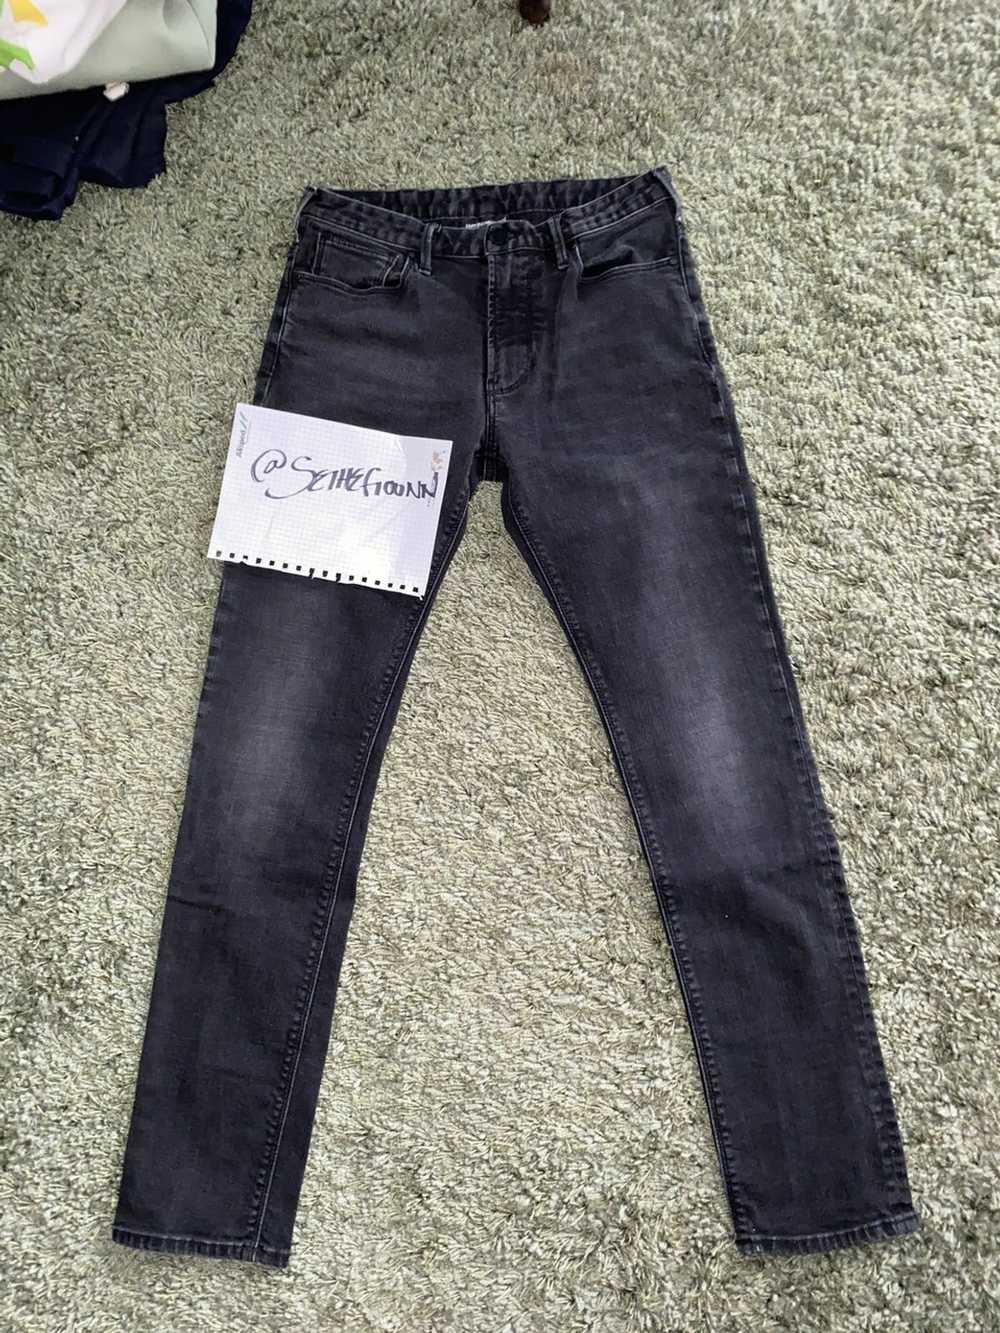 Emporio Armani Emporio Armani Black Jeans - image 1